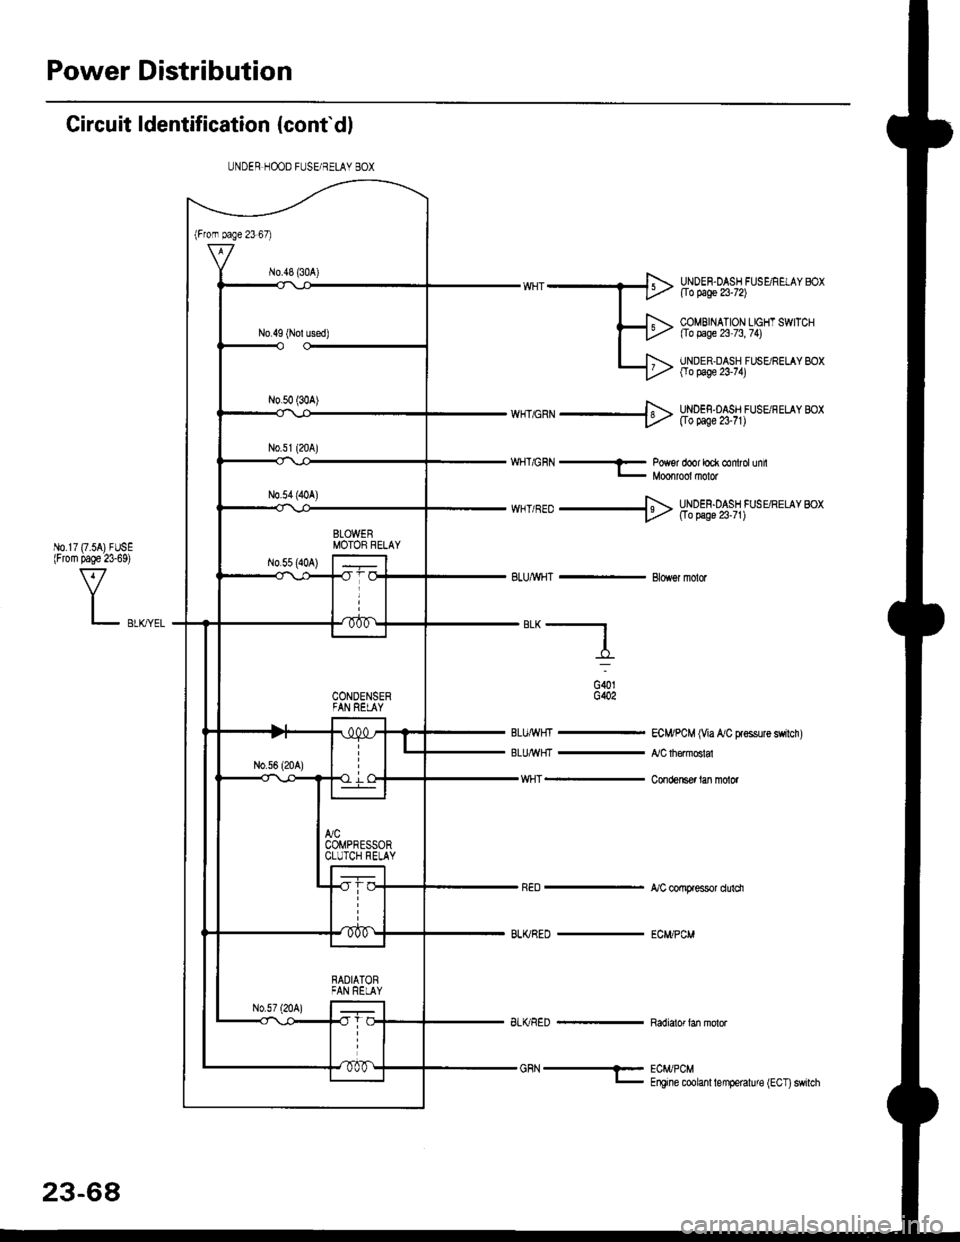 HONDA CIVIC 1996 6.G Manual PDF Power Distribution
Circuit ldentification (conf dl
ECI4/PCM (Via A/C Fsssure switch)
,VC th€modA
Con(,ensef lan molor
A/C comFessor dulci
ECWPCM
UNDER HOOD FUSE/BELAY BOX
"*-f_
v{HT -
BLI(/RED -
UND